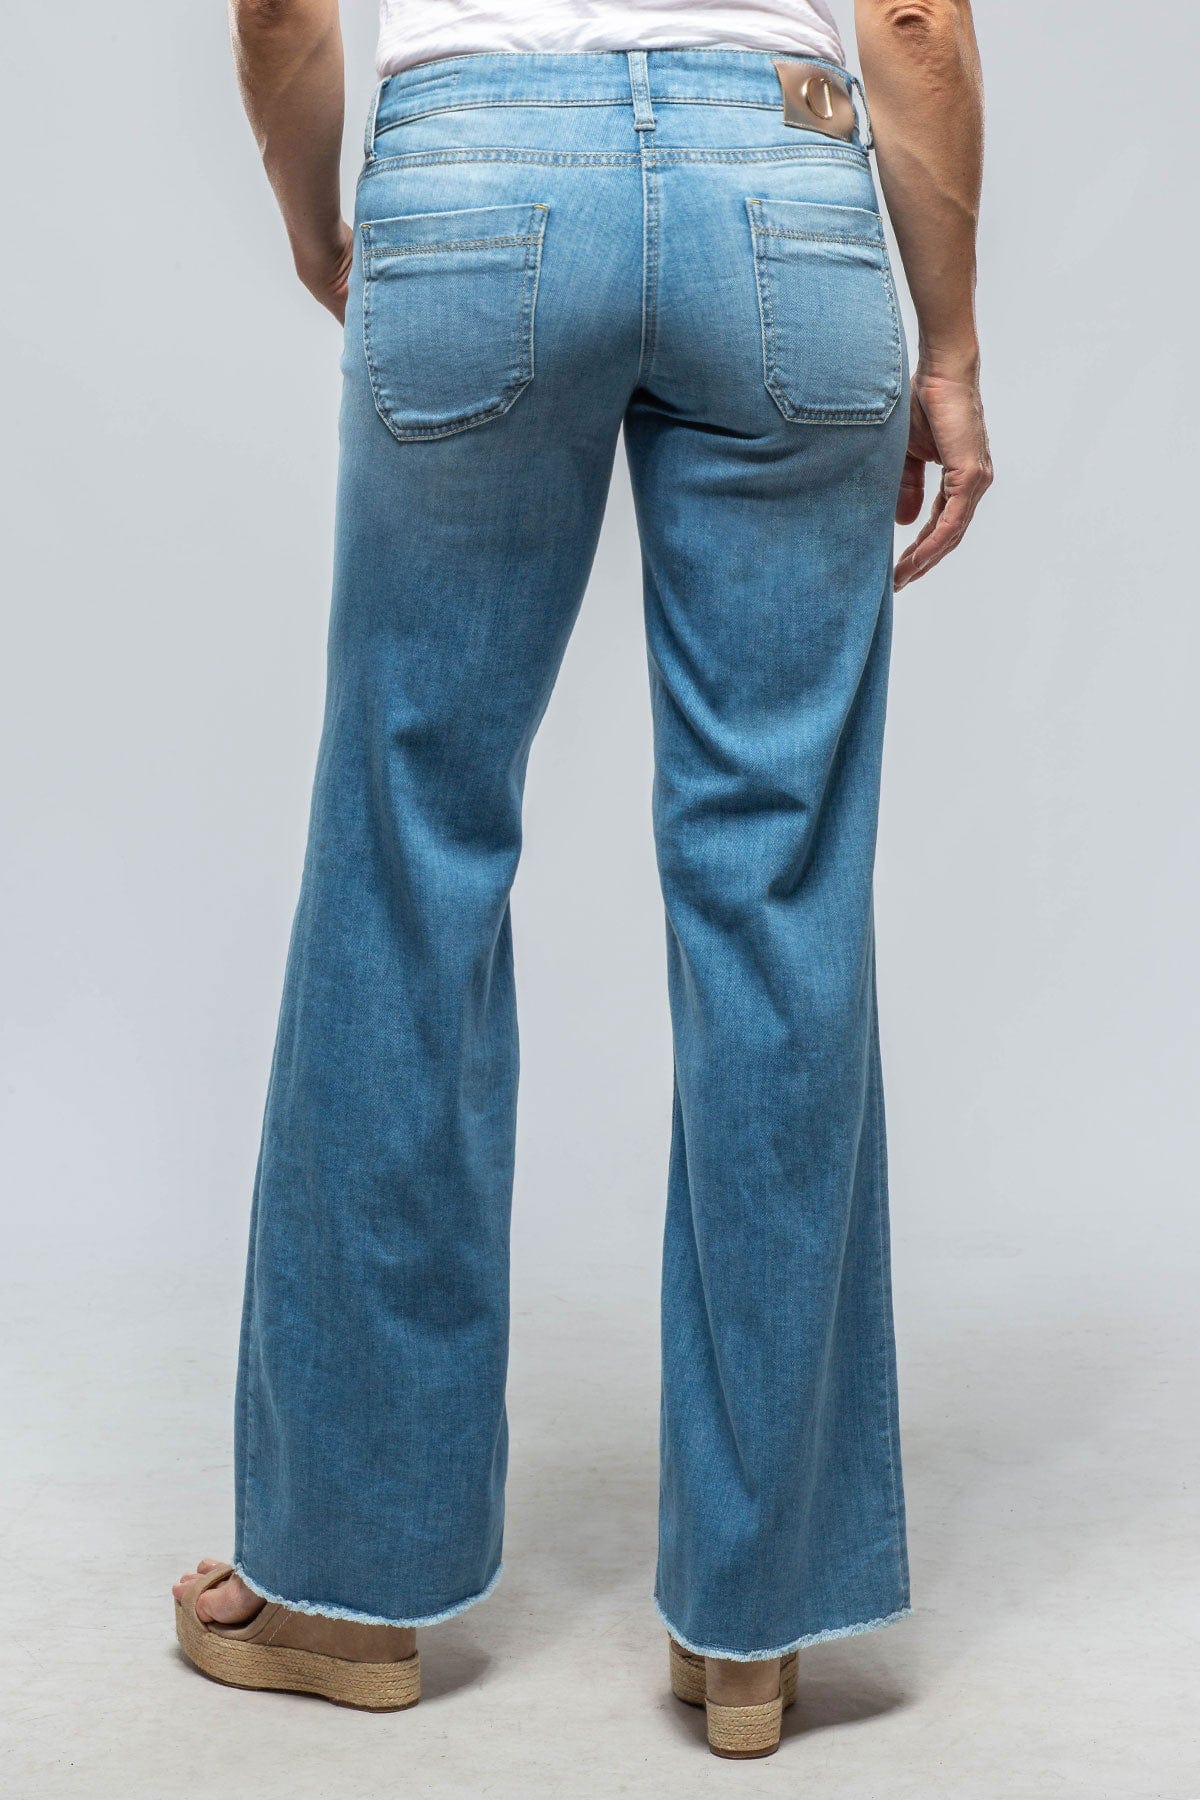 Tess Square Pocket Jean In Lt. Blue - AXEL'S